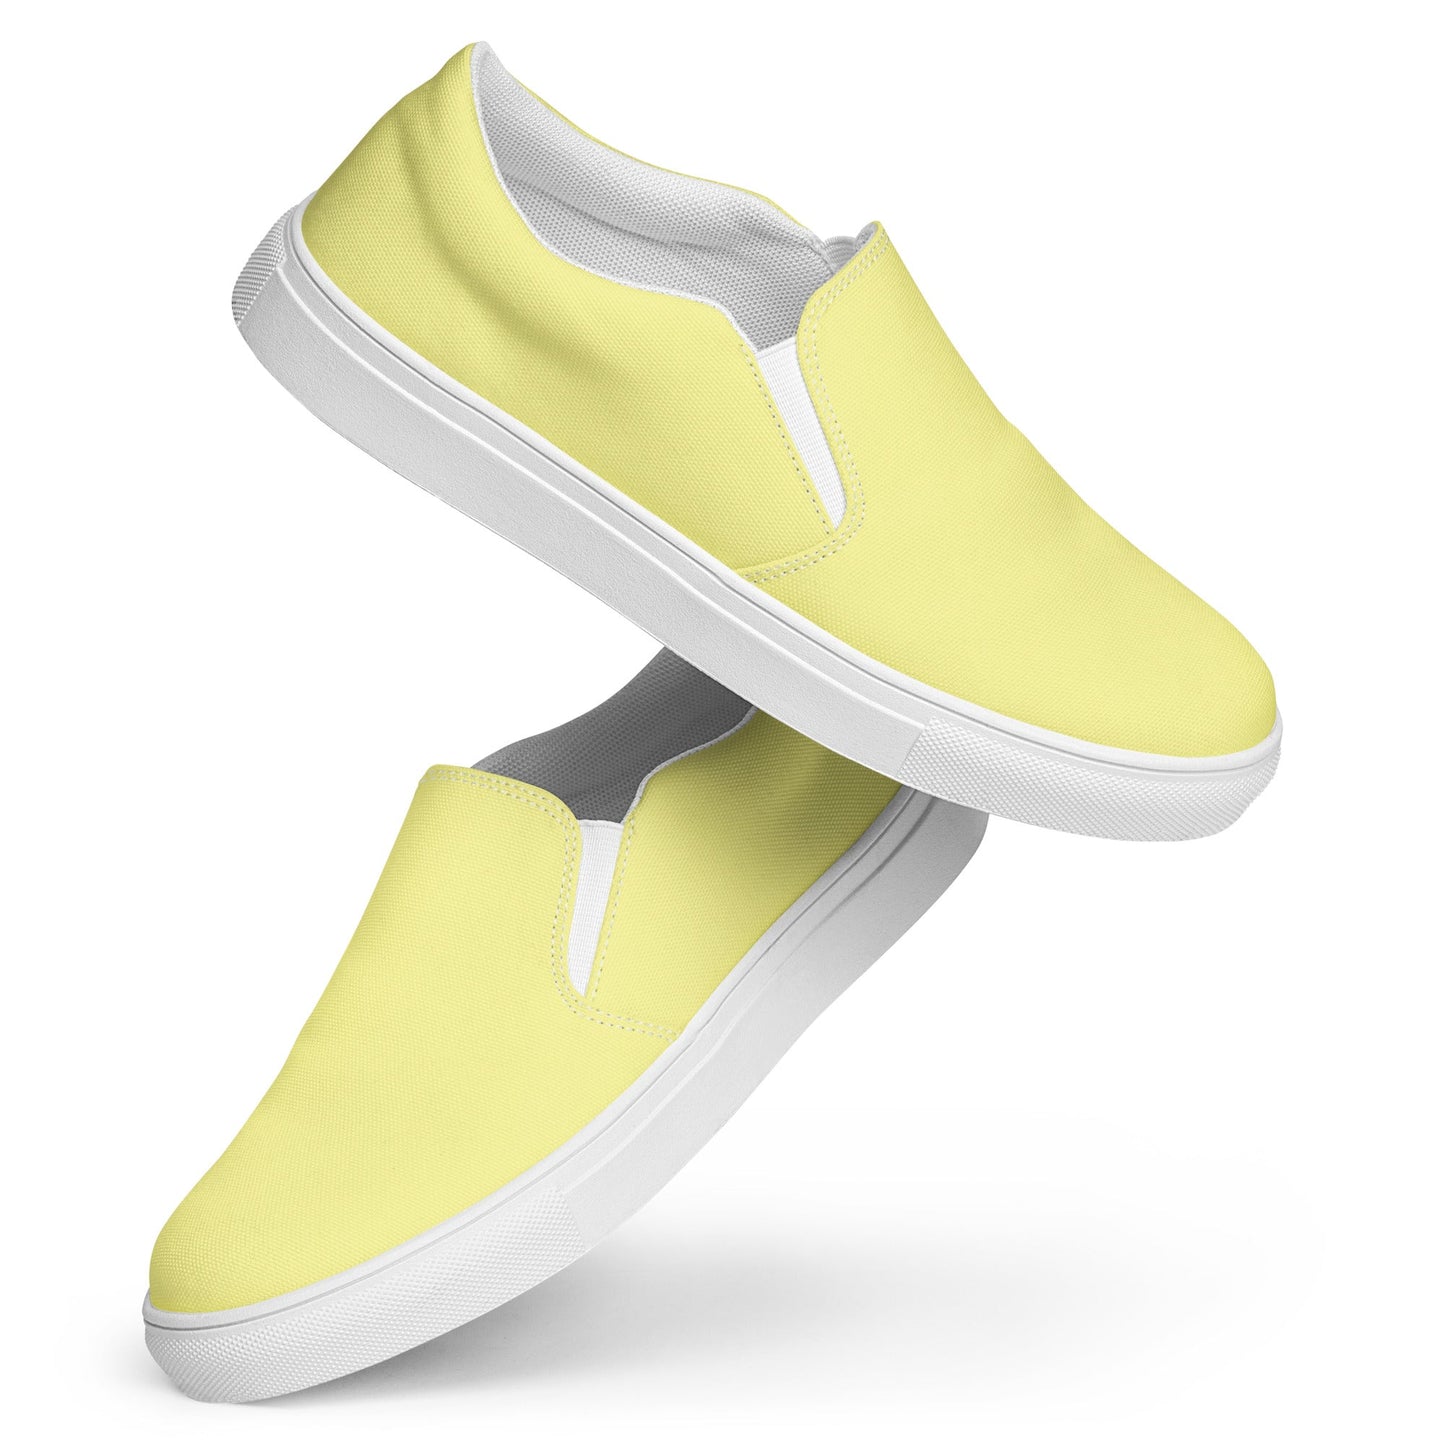 klasneakers Women’s slip-on canvas shoes - Lemon Yellow